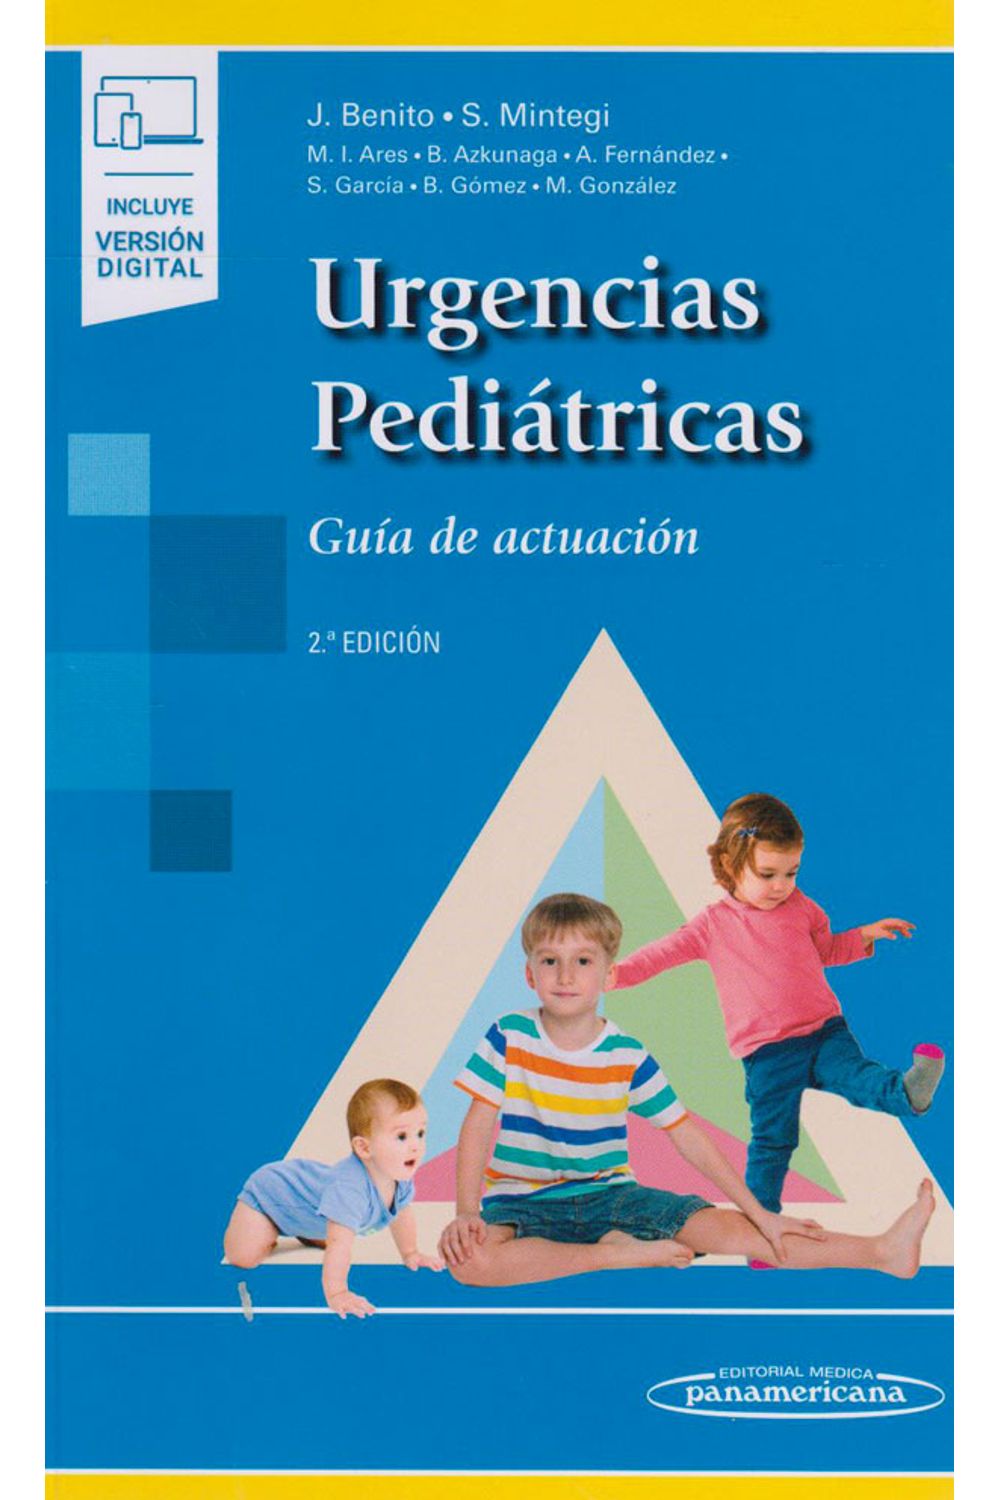 urg-pediatricas-9788491102601-empa